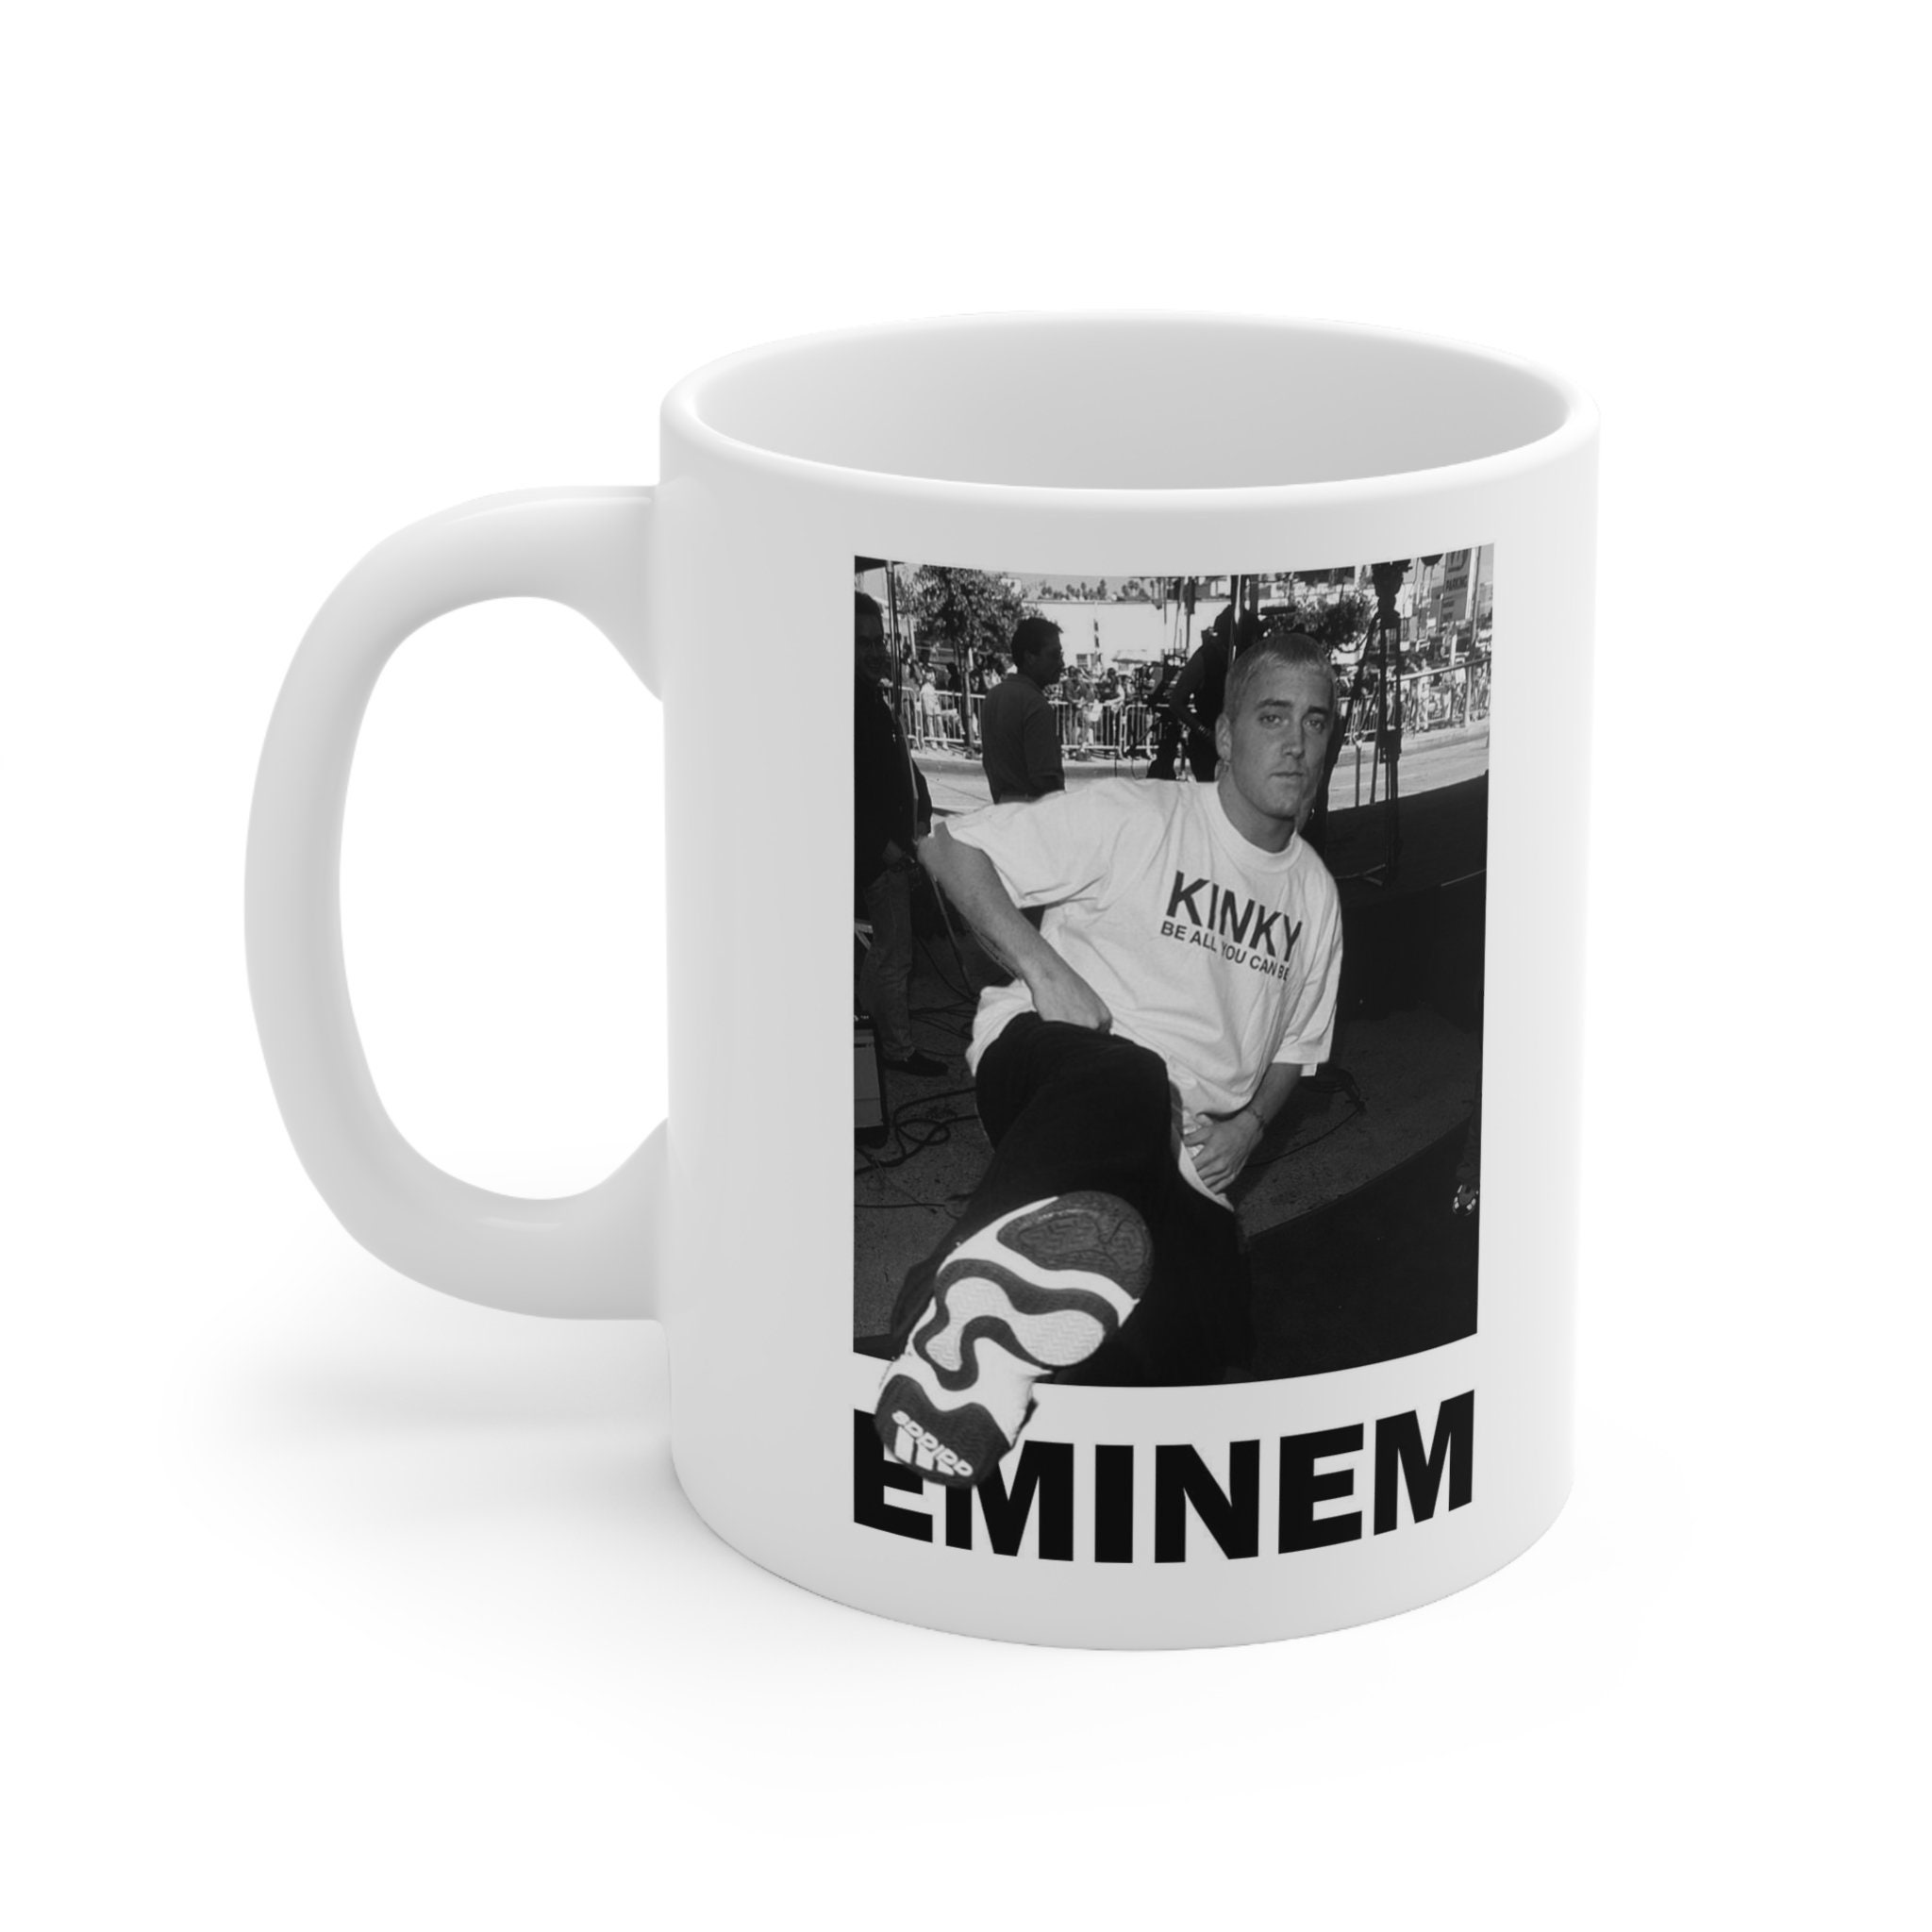 Eminem Every Moment Is Another Chance Vintage Mug Slim Shady Mug Double M  Mug M&m Mug Premium Sublime Ceramic Coffee Mug Black - Teeruto